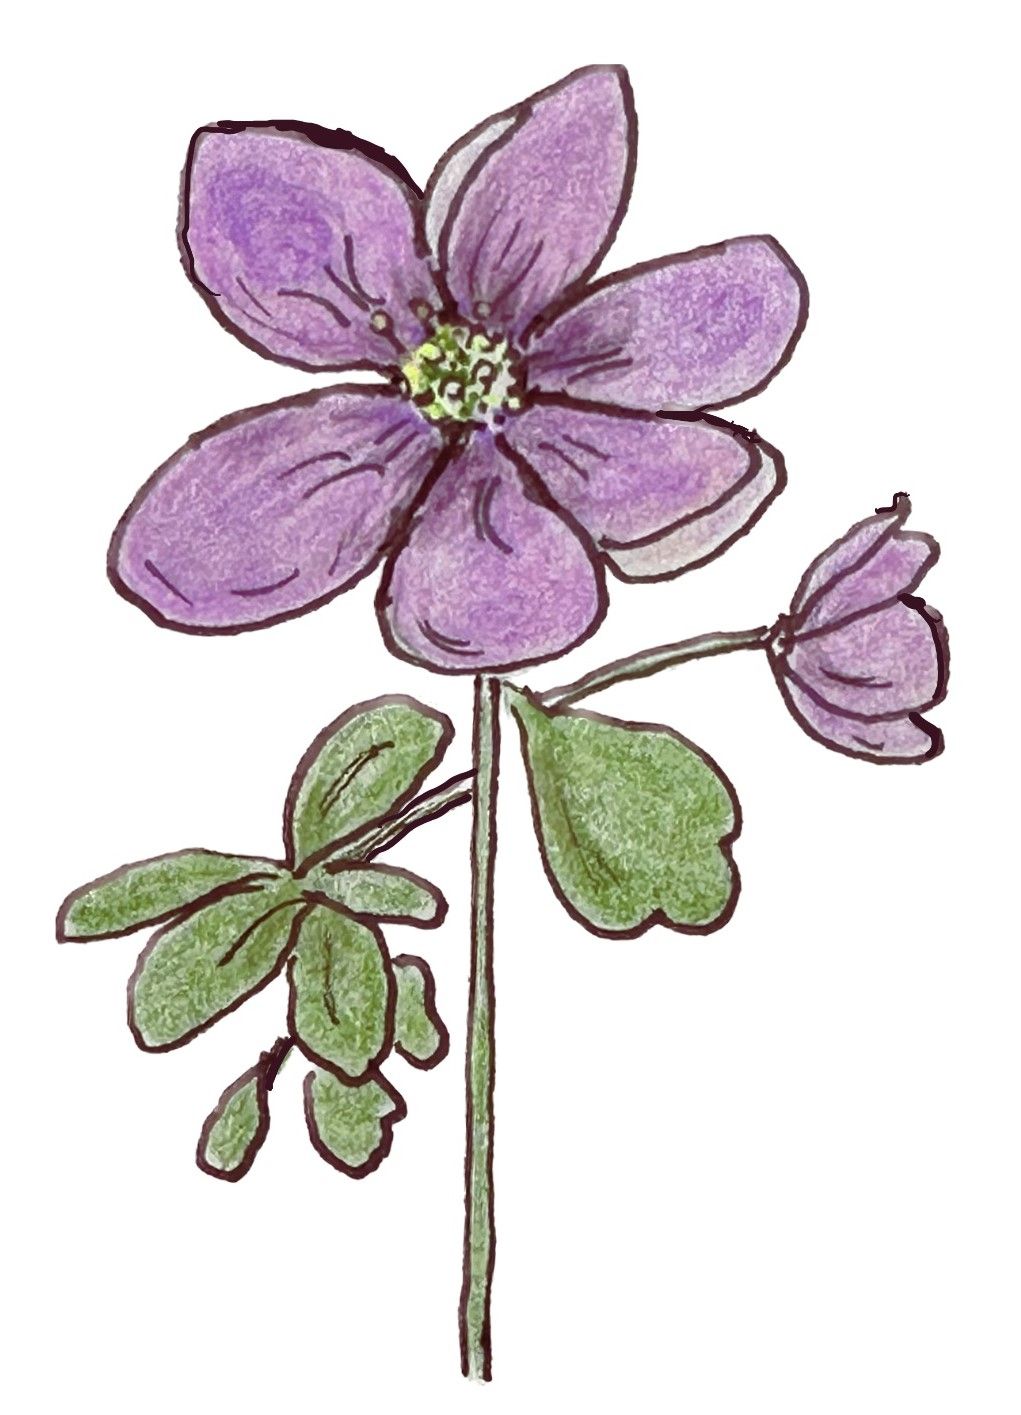 Drawing of a purple rue anemone by Lisa Meyers McClintick.